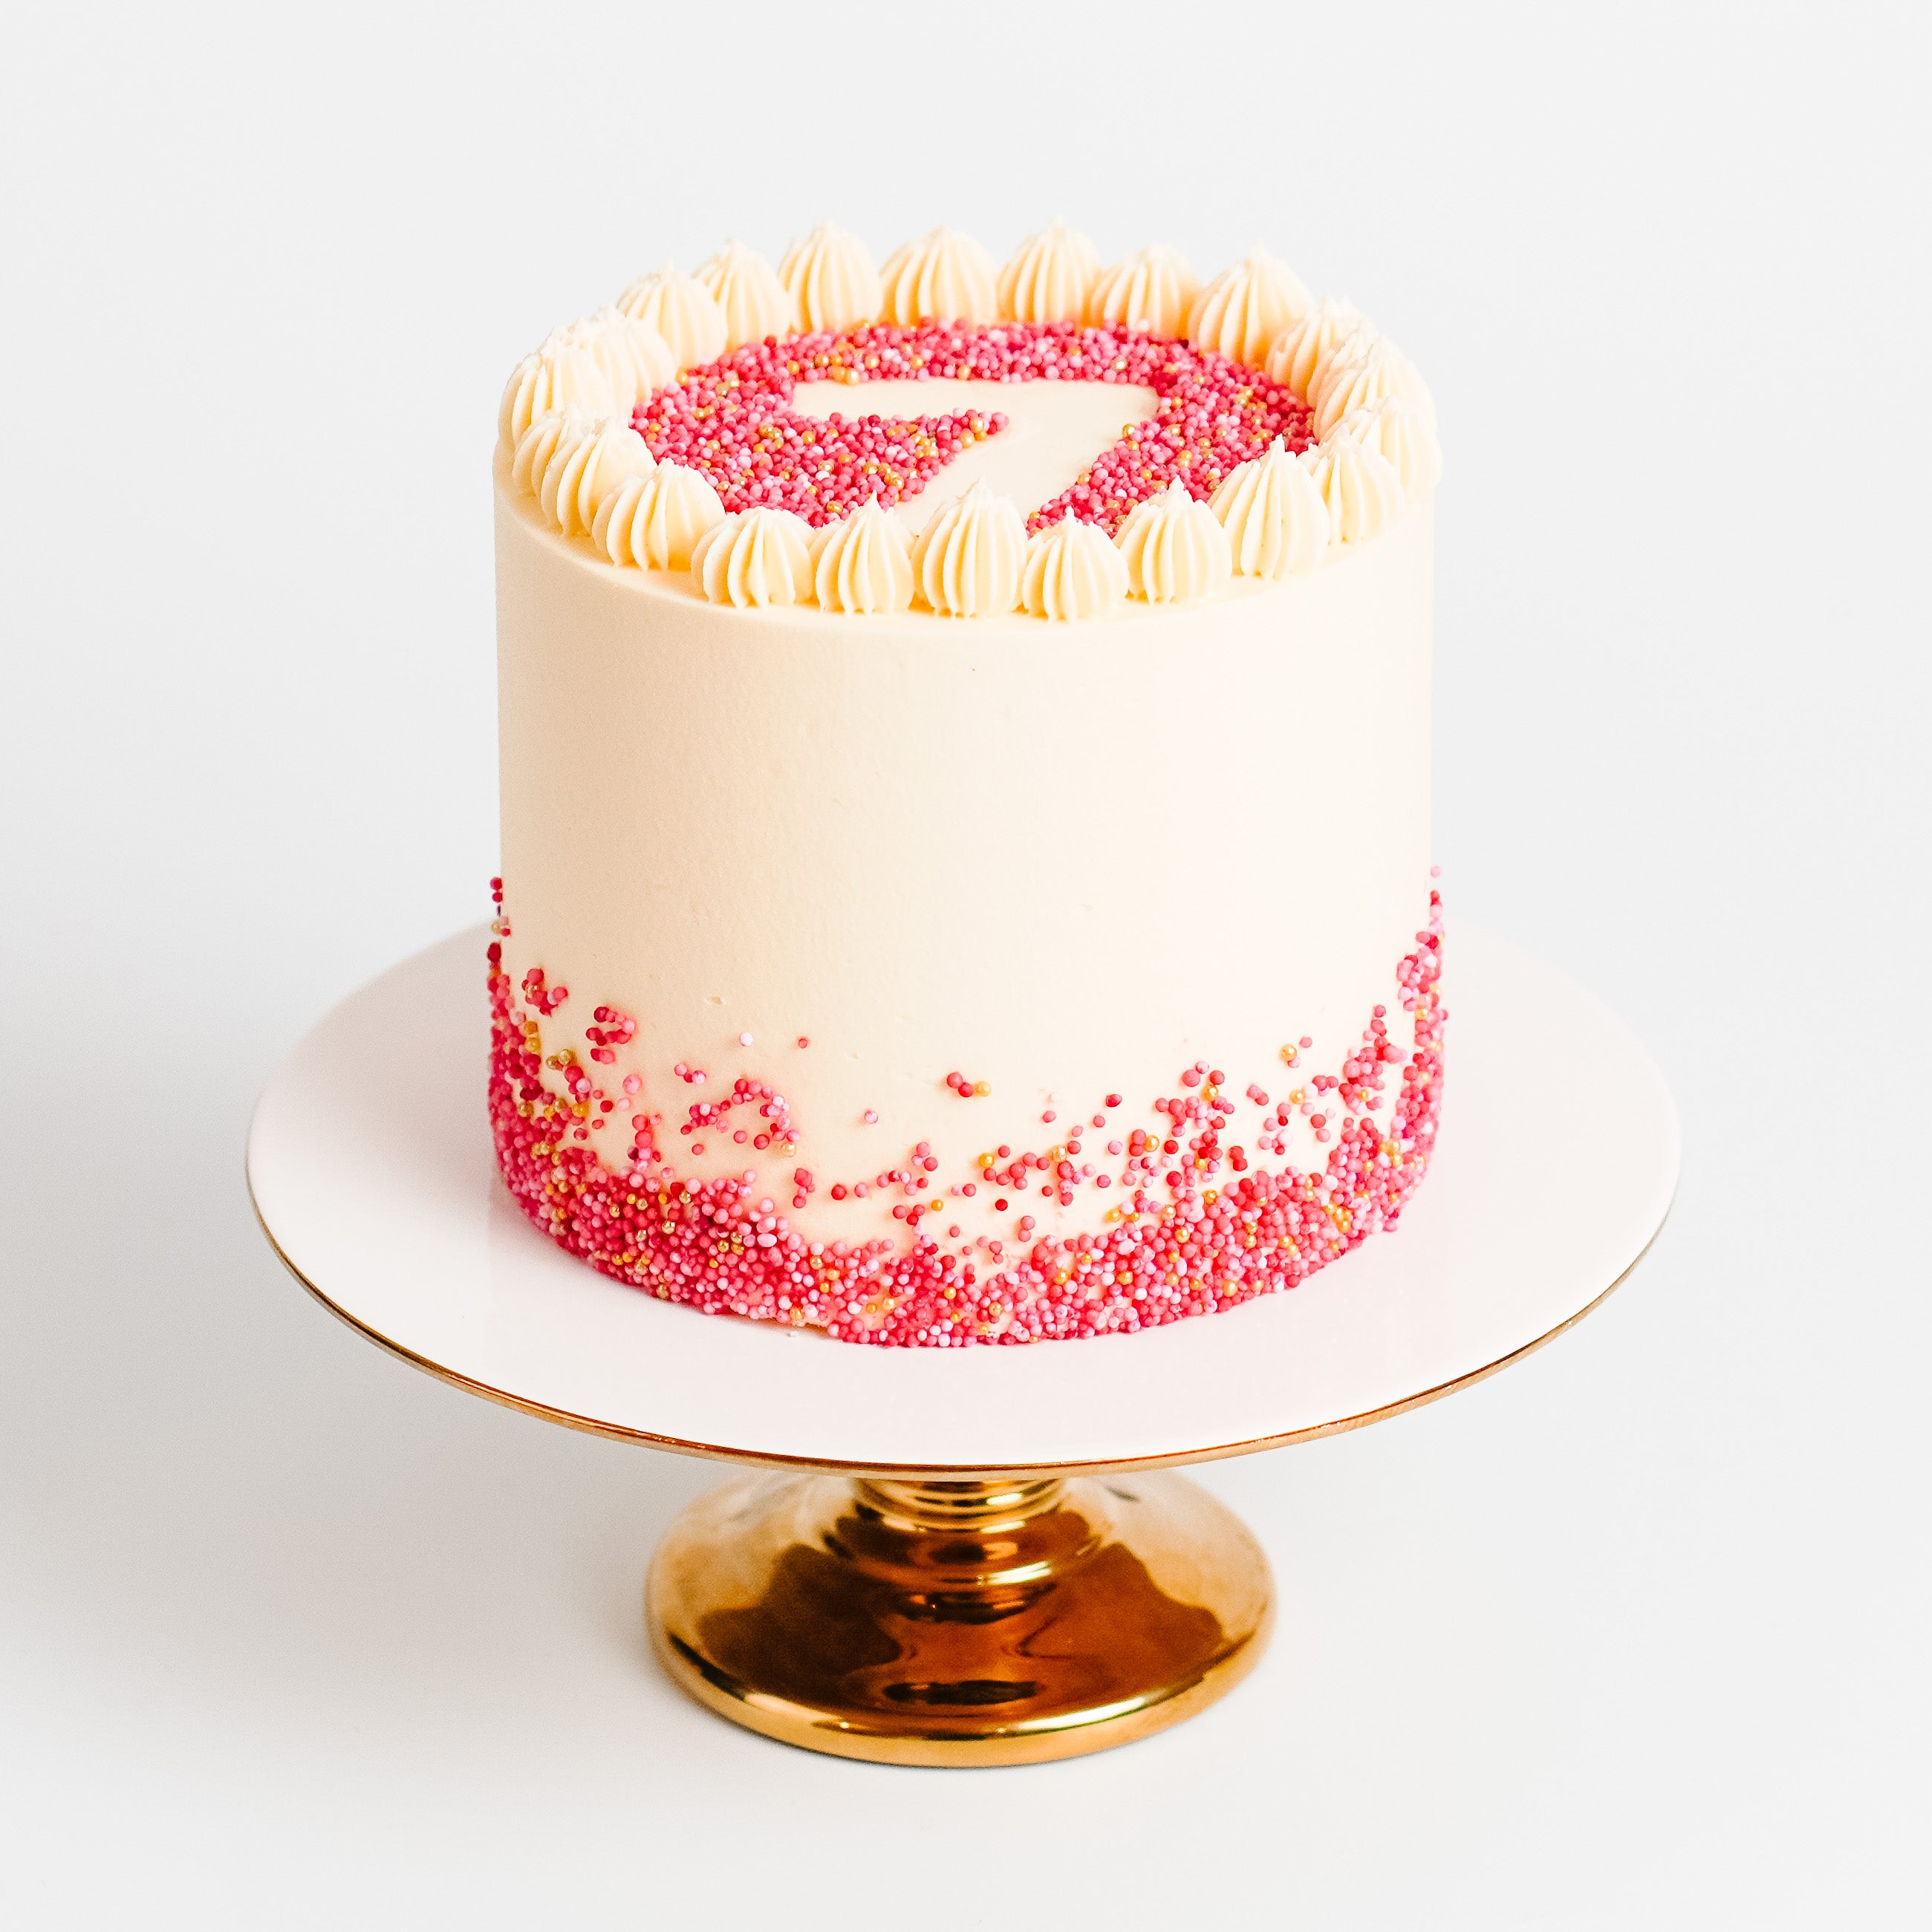 41 Fun And Colorful Sprinkle Wedding Cakes - Weddingomania